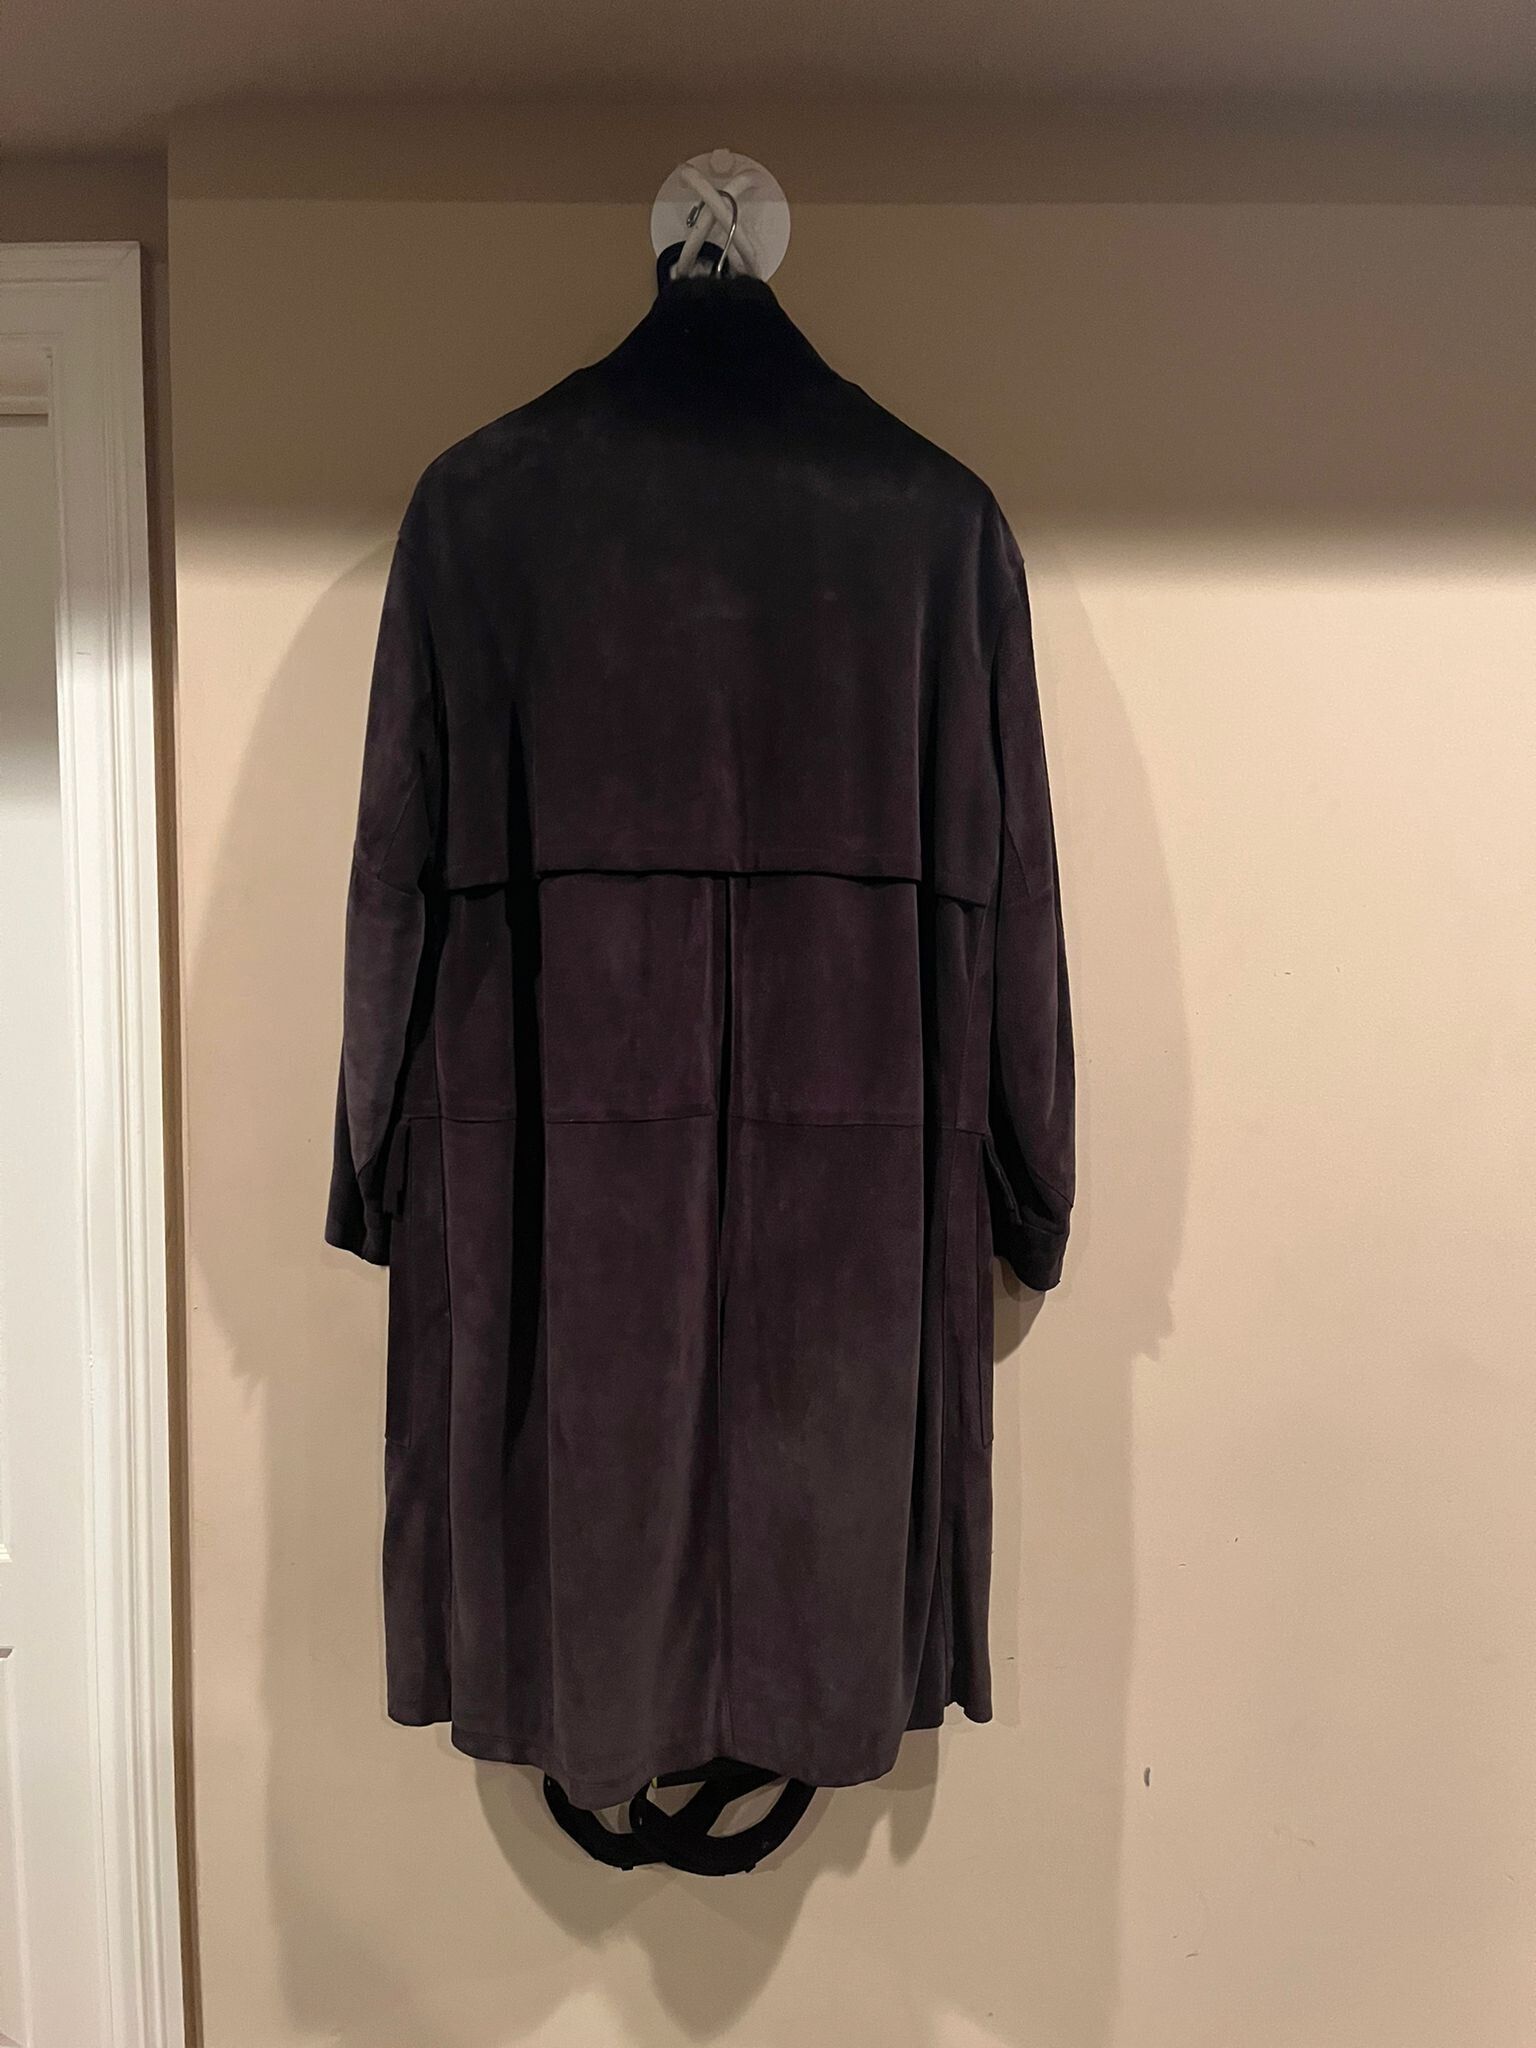 Gucci Long Coat in Dark Brown Size US M / EU 48-50 / 2 - 7 Thumbnail